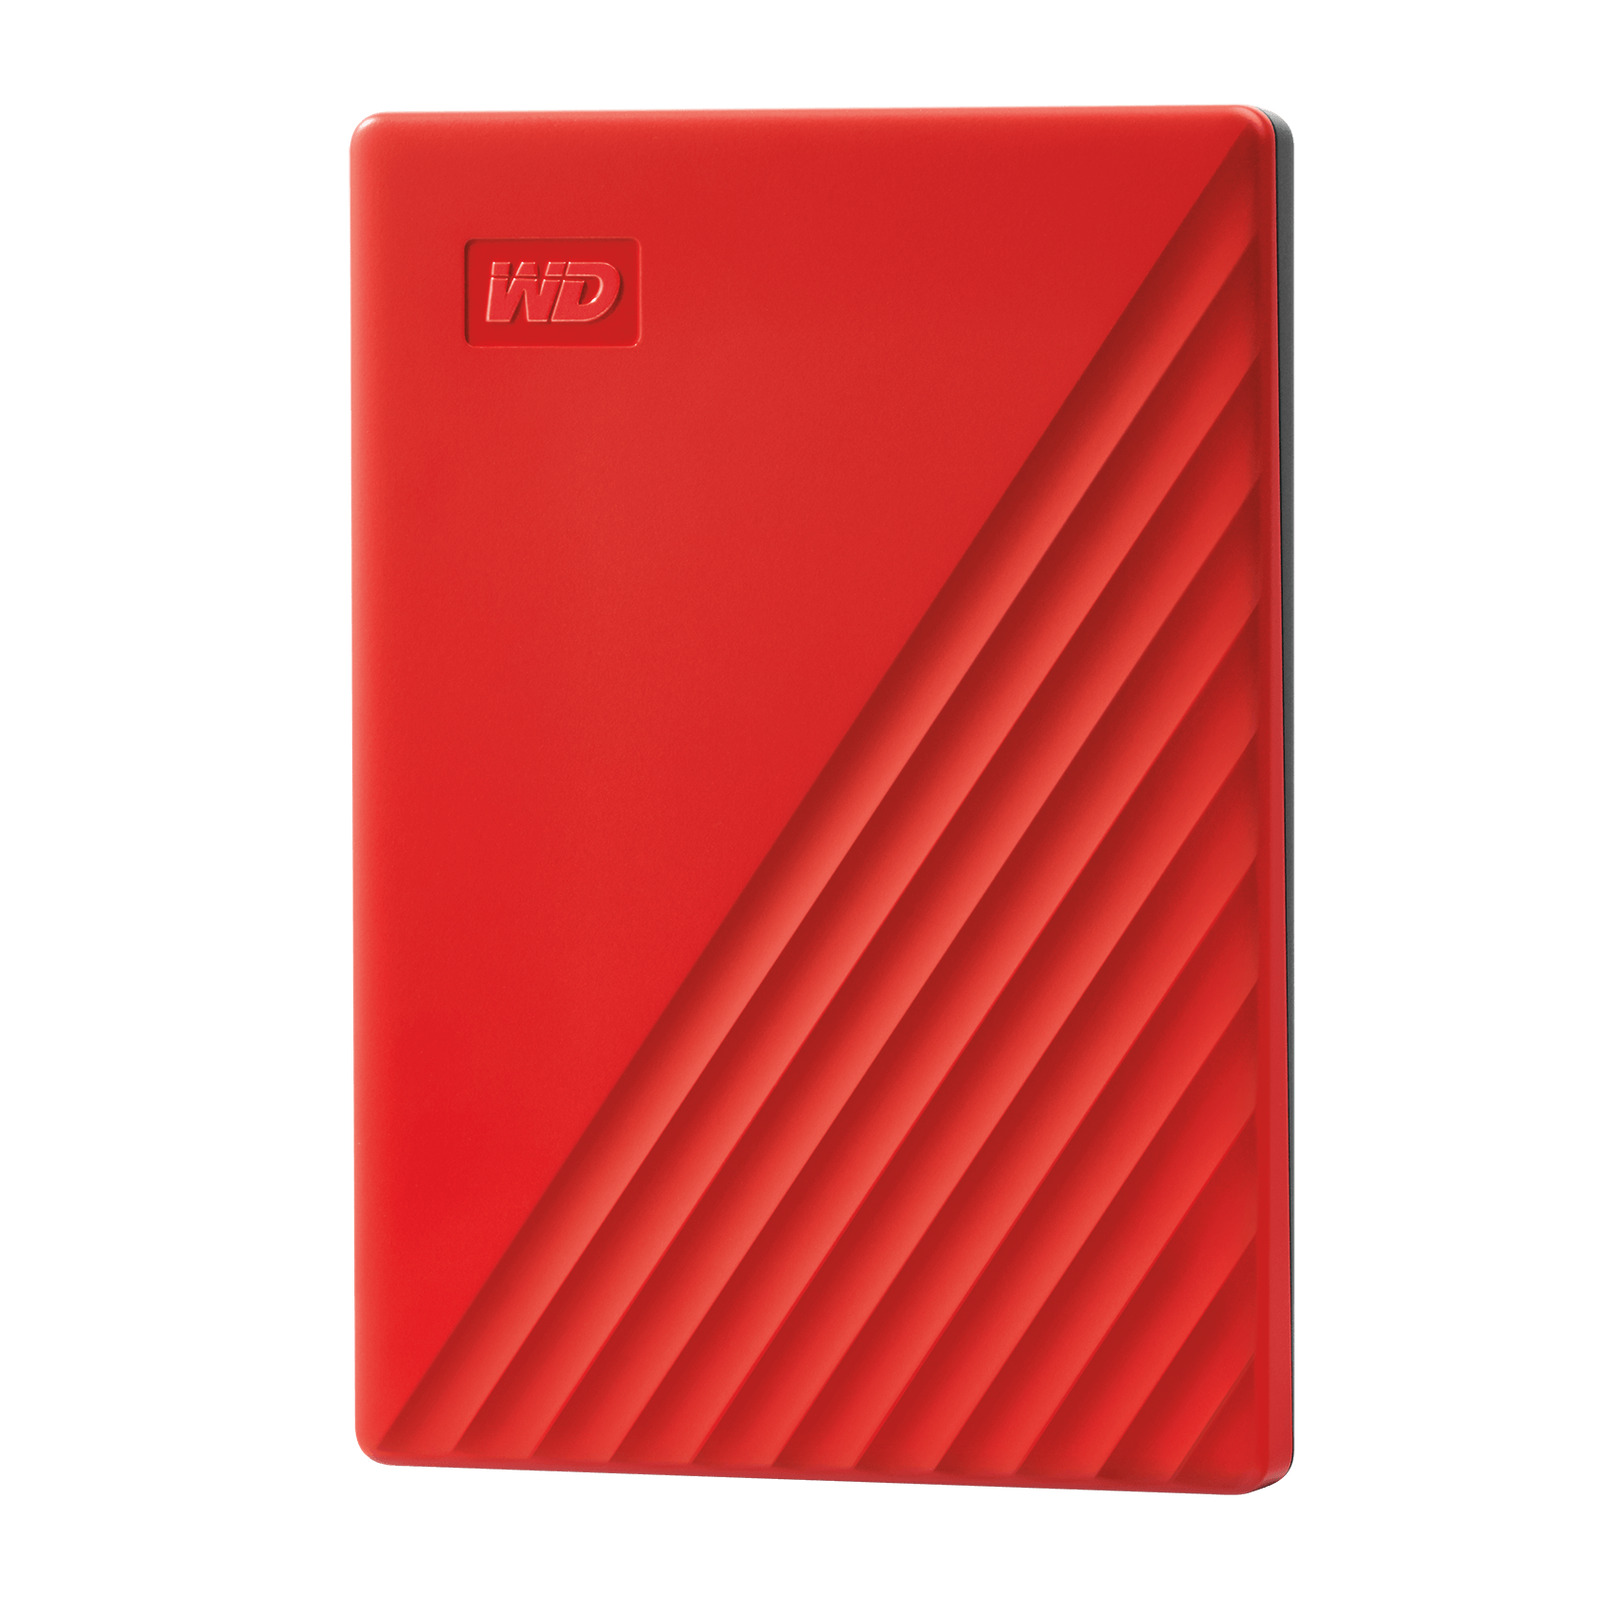 WD 2TB My Passport, Portable External Hard Drive, Red - WDBYVG0020BRD-WESN